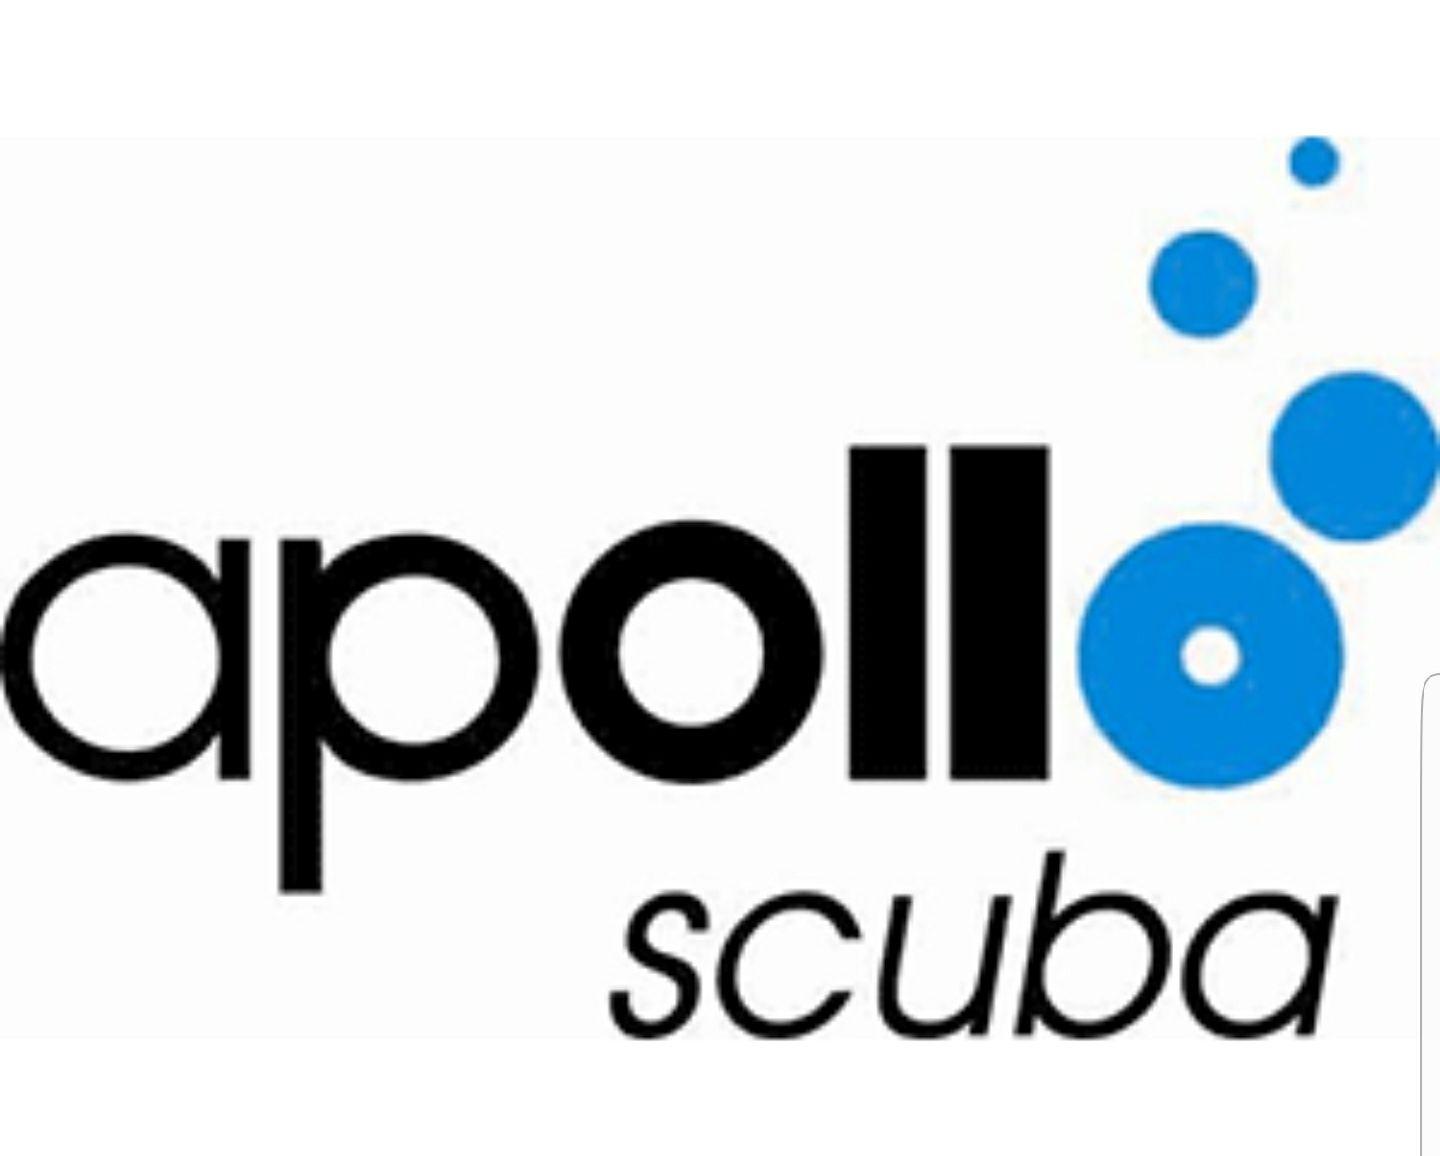 Apollo Logo - Apollo logo